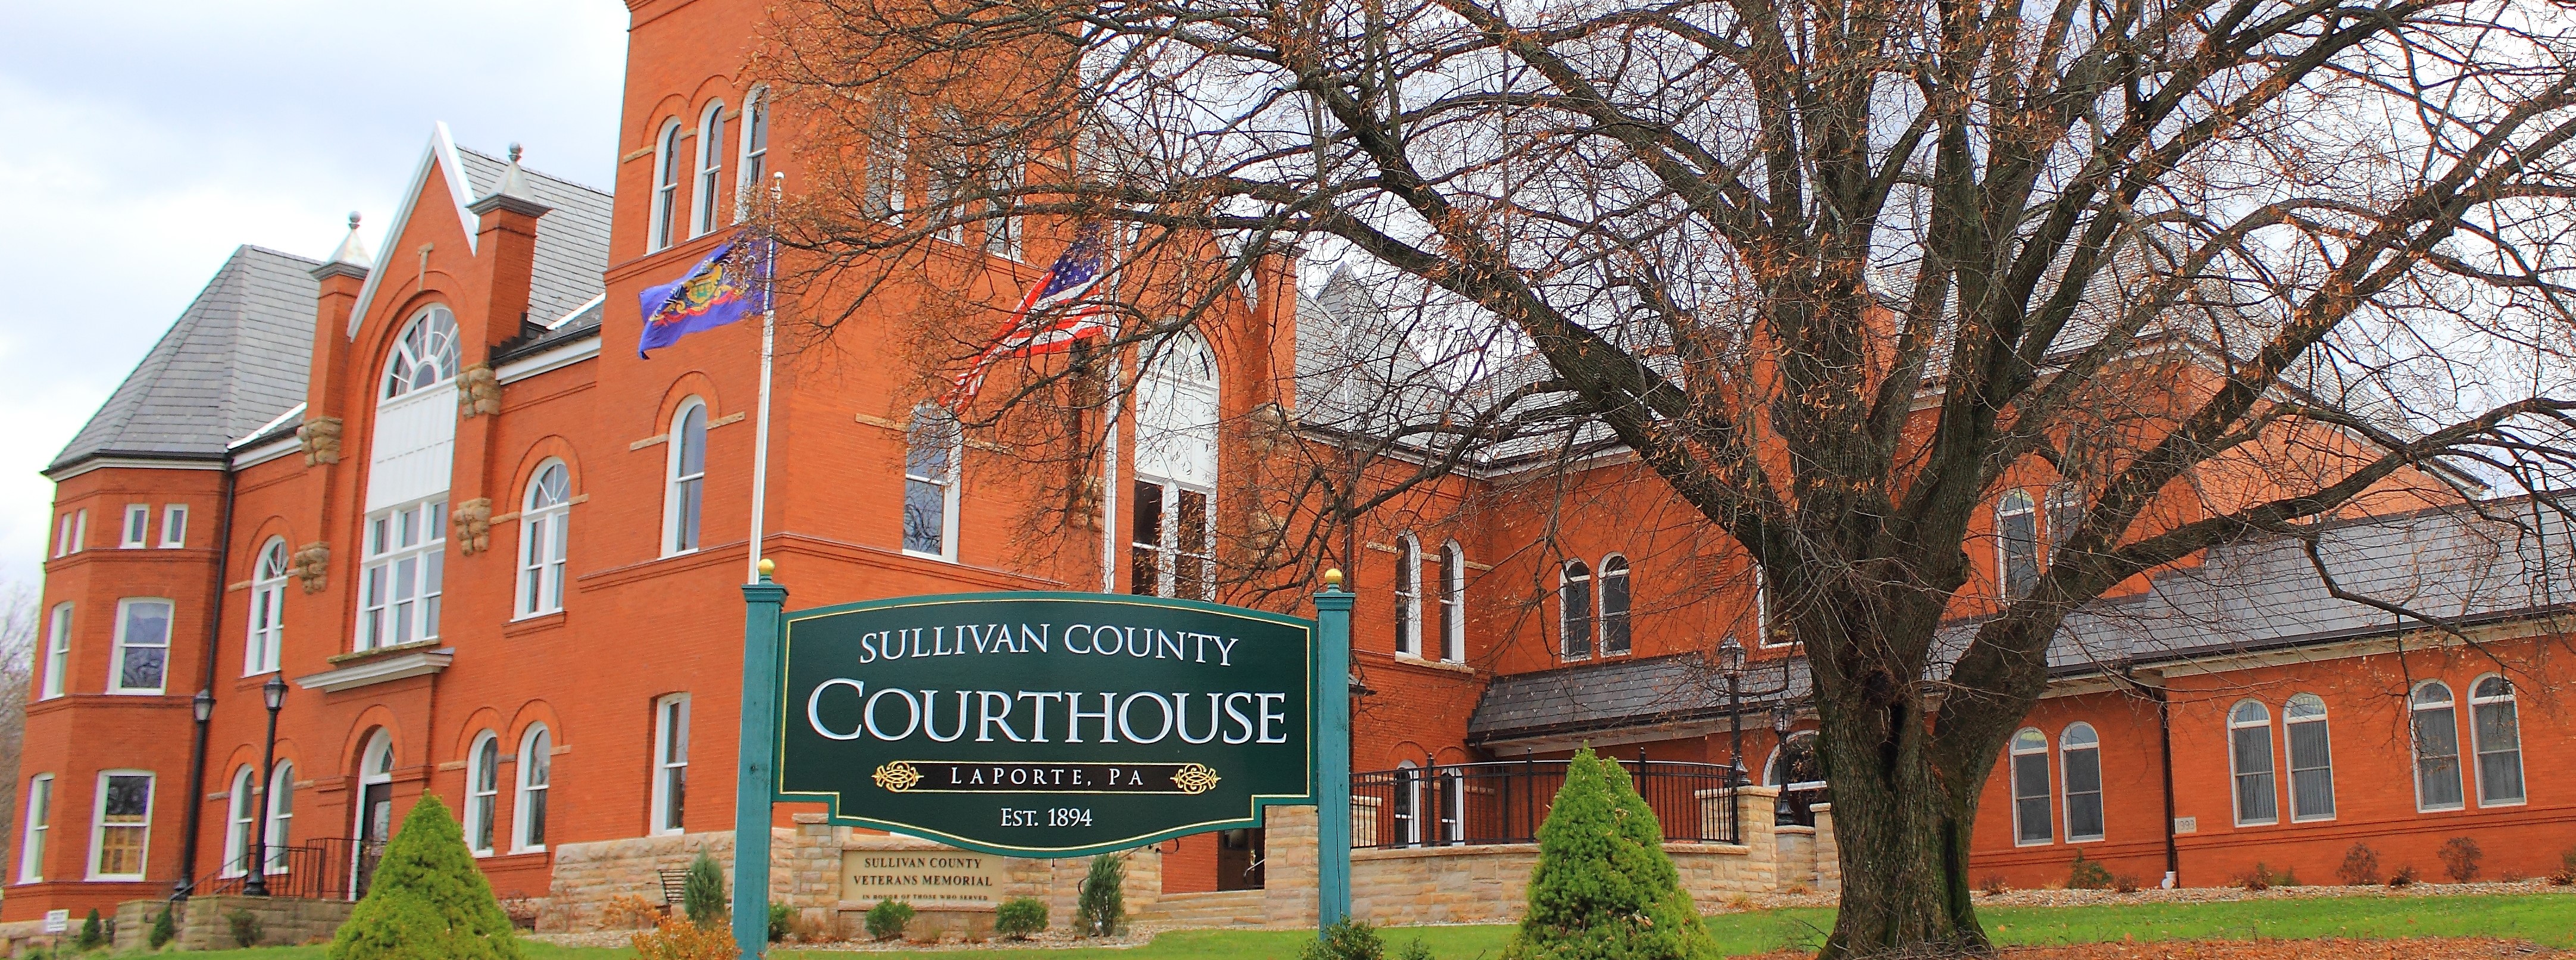 Sullivan County Courthouse Photo.jpg